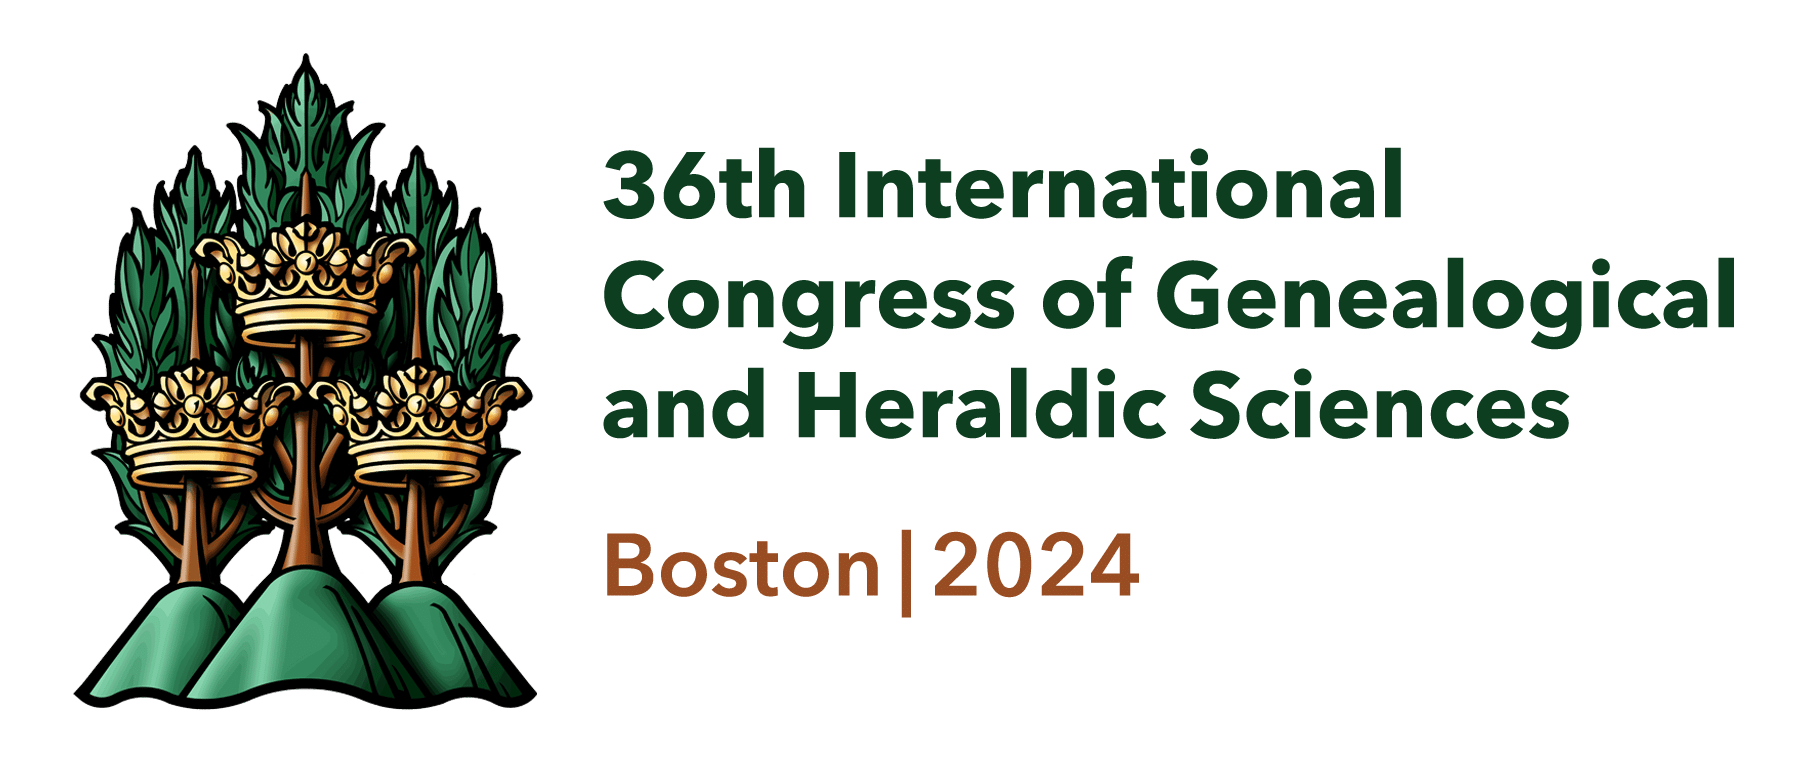 36th International Congress of Genealogical and Heraldic Sciences